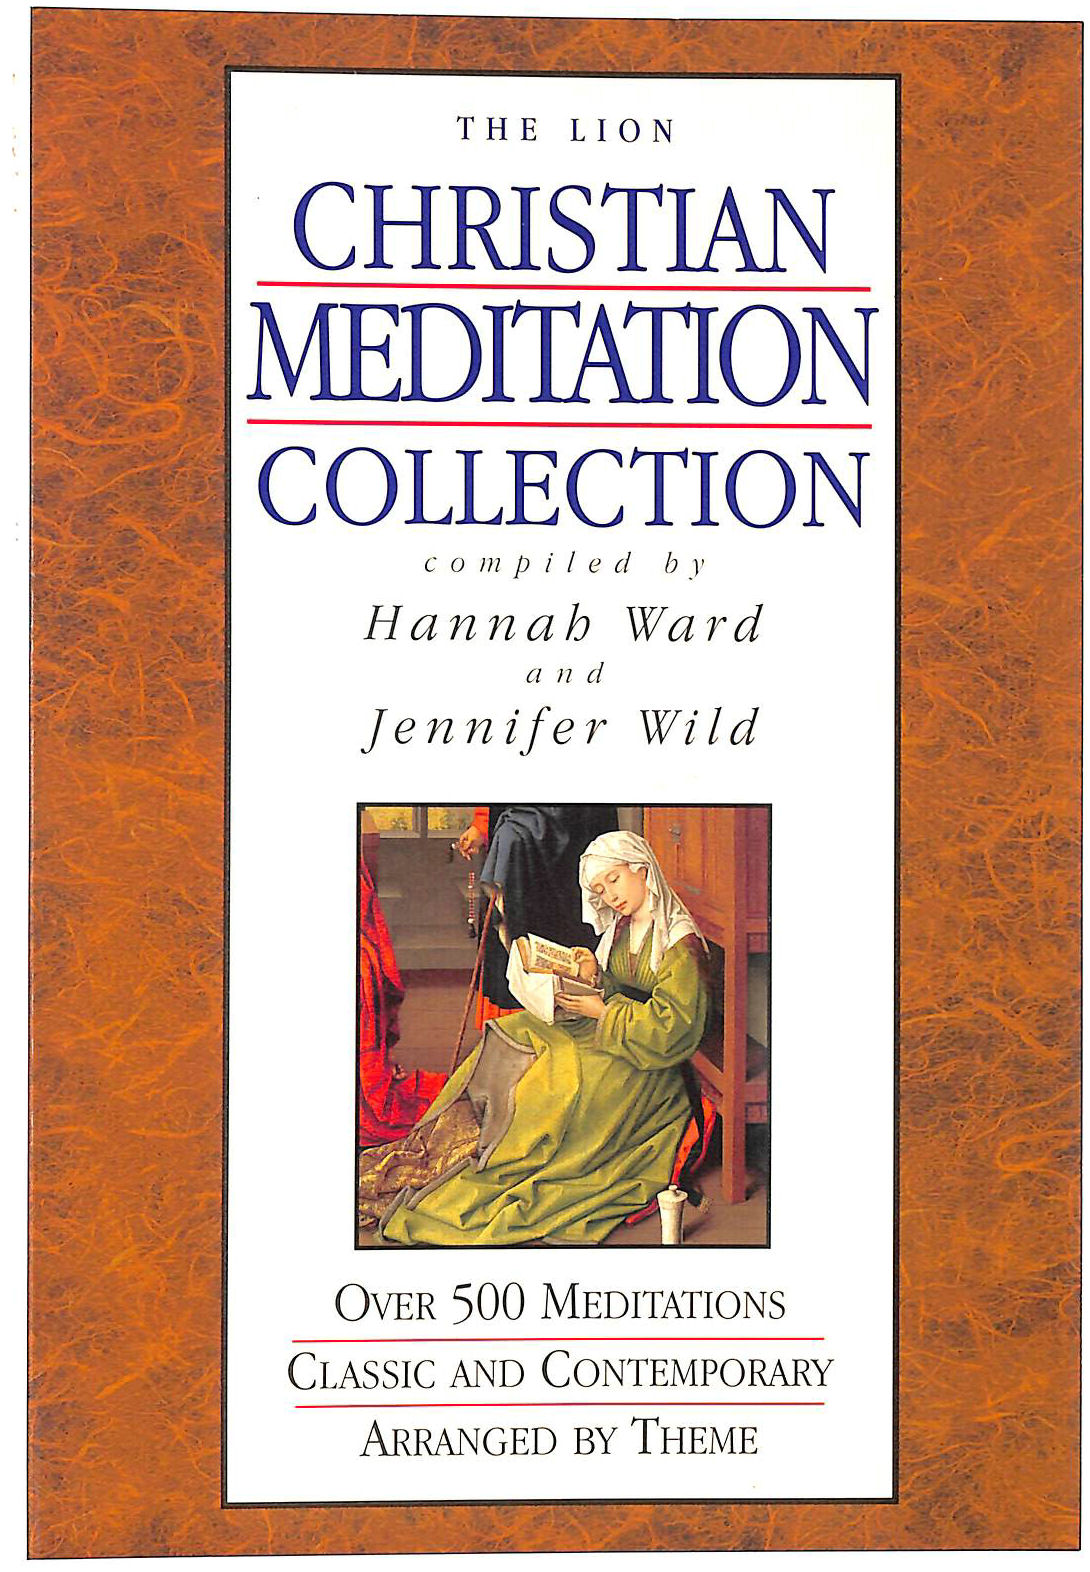 HANNAH WARD, JENNIFER WILD - The Lion Christian Meditation Collection